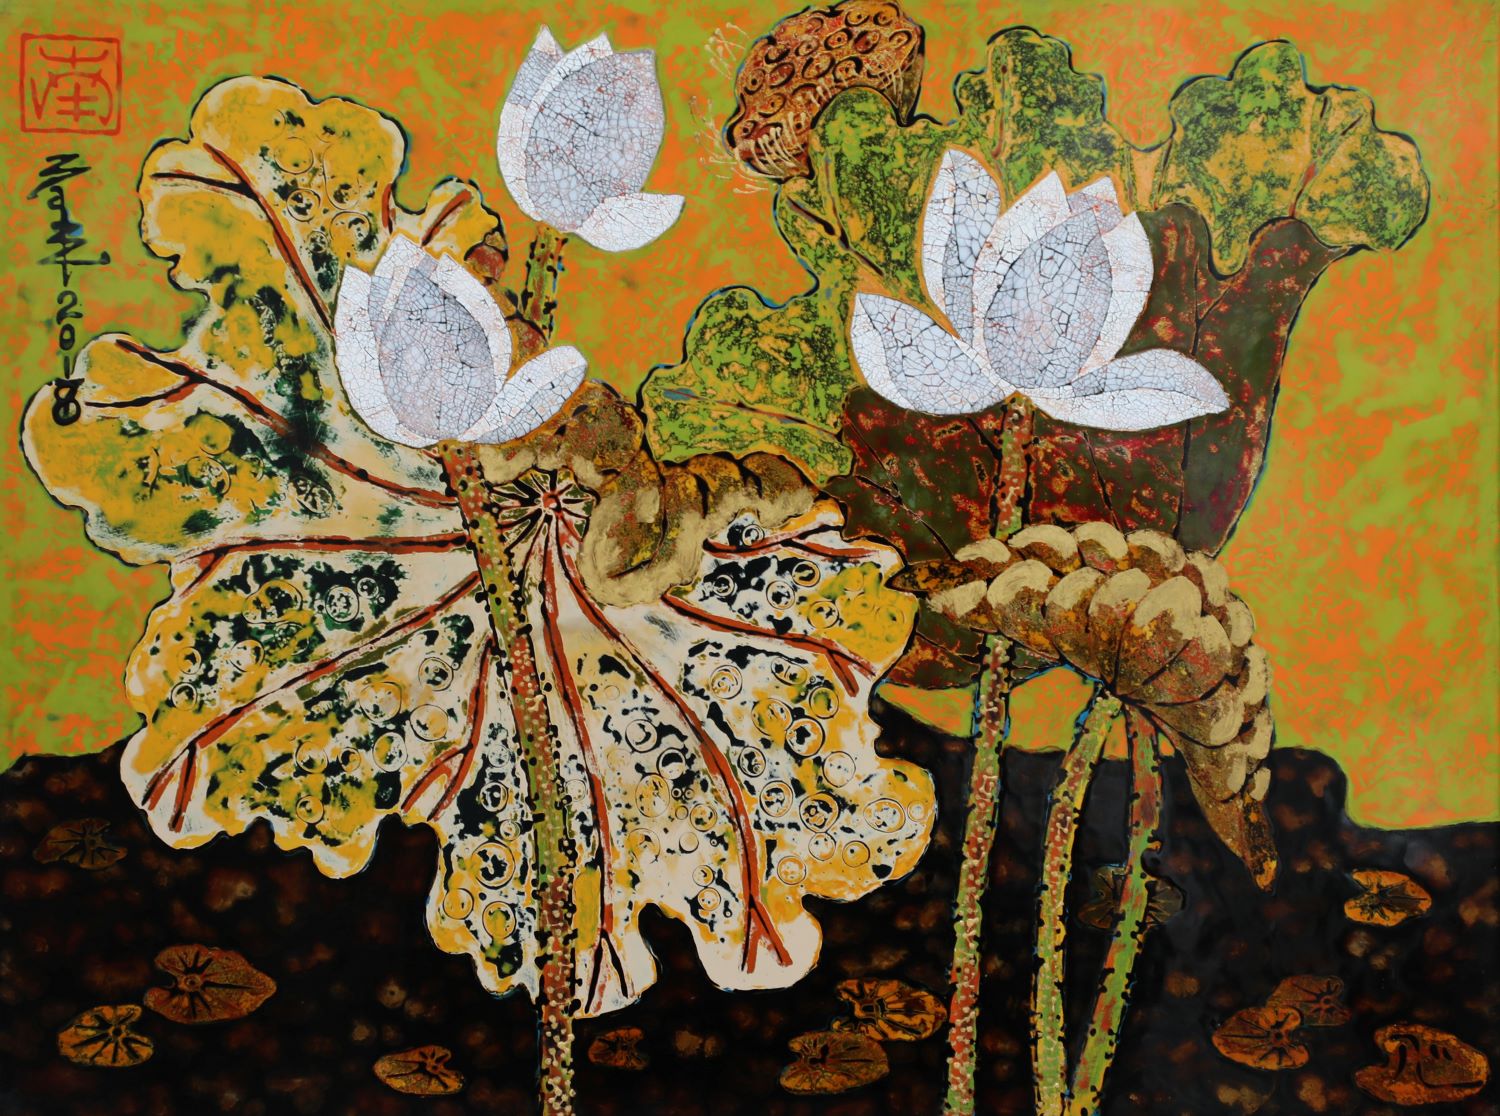 Summer Sunlight III - Vietnamese Lacquer Paintings by Artist Tran Thieu Nam